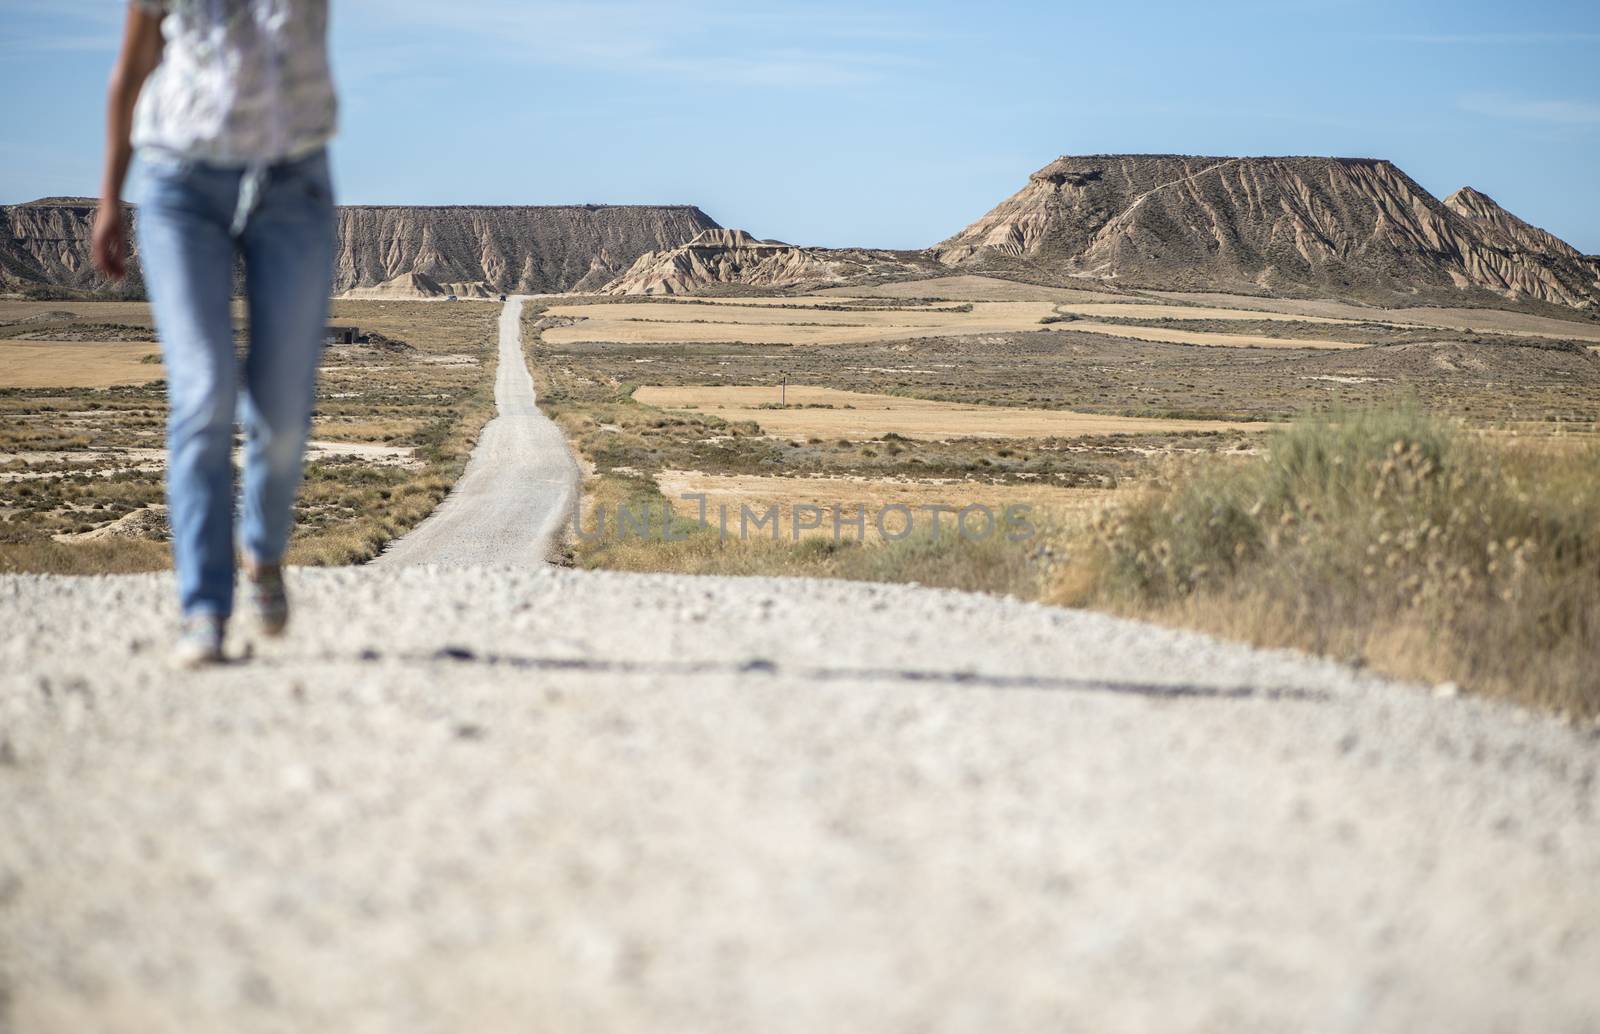 Woman walking on dirt road. Looking like a movie